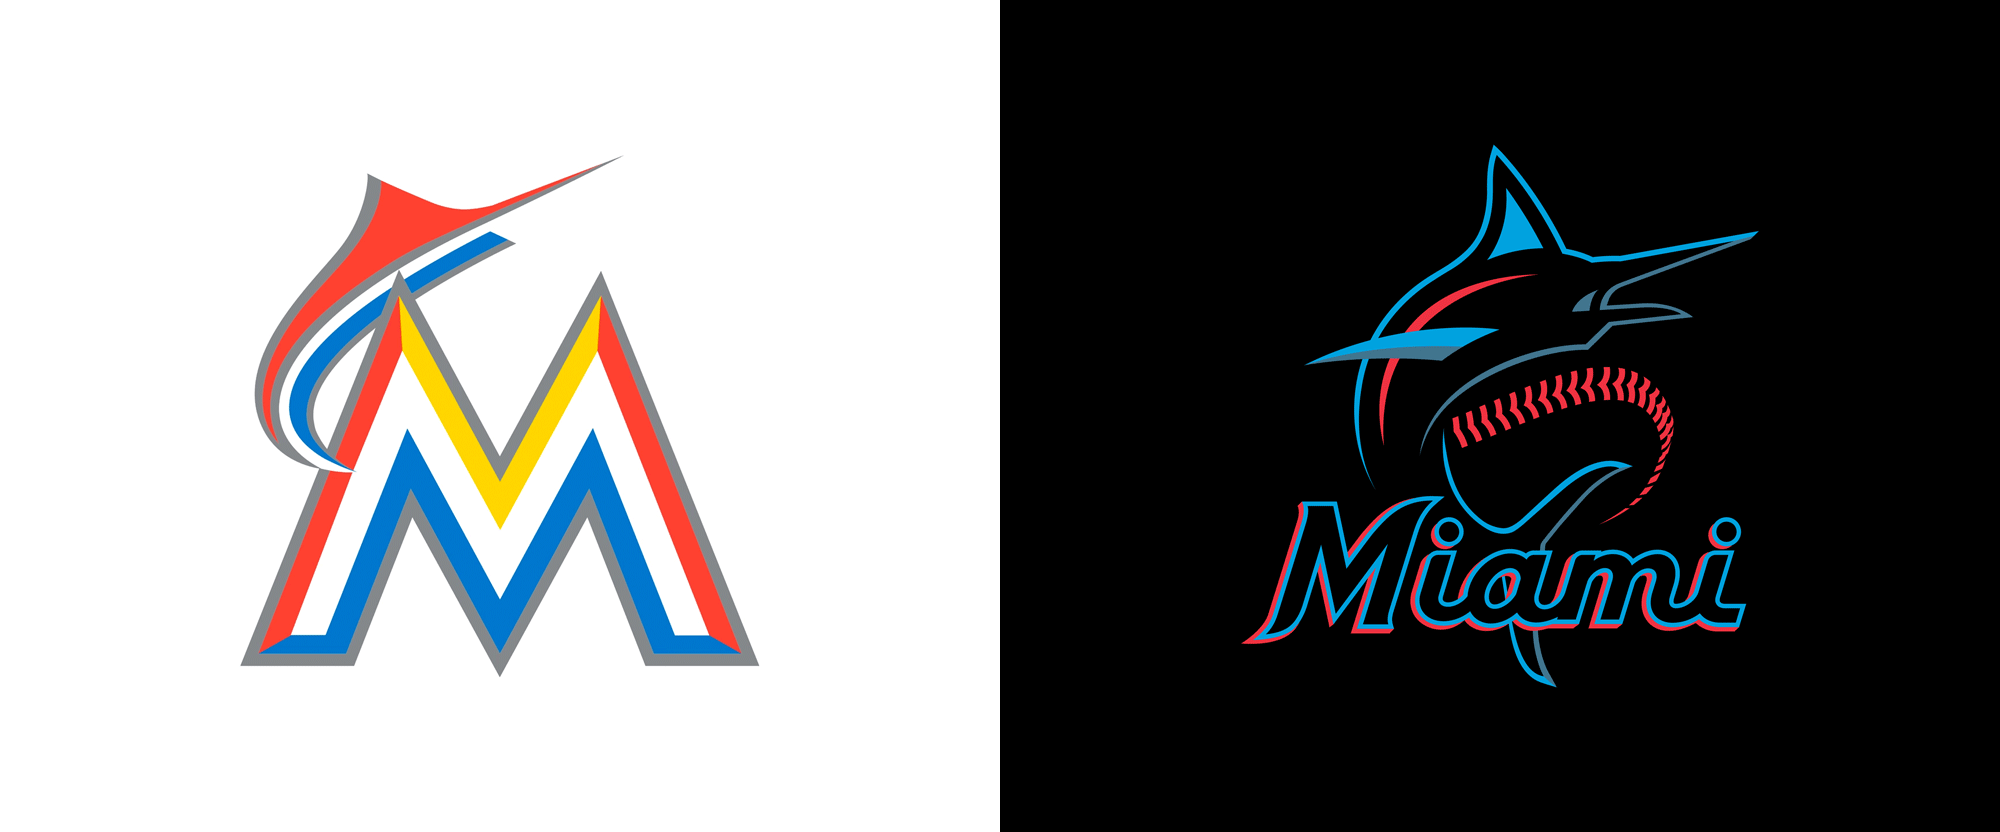 Marlins Logo - Brand New: New Logo for Miami Marlins